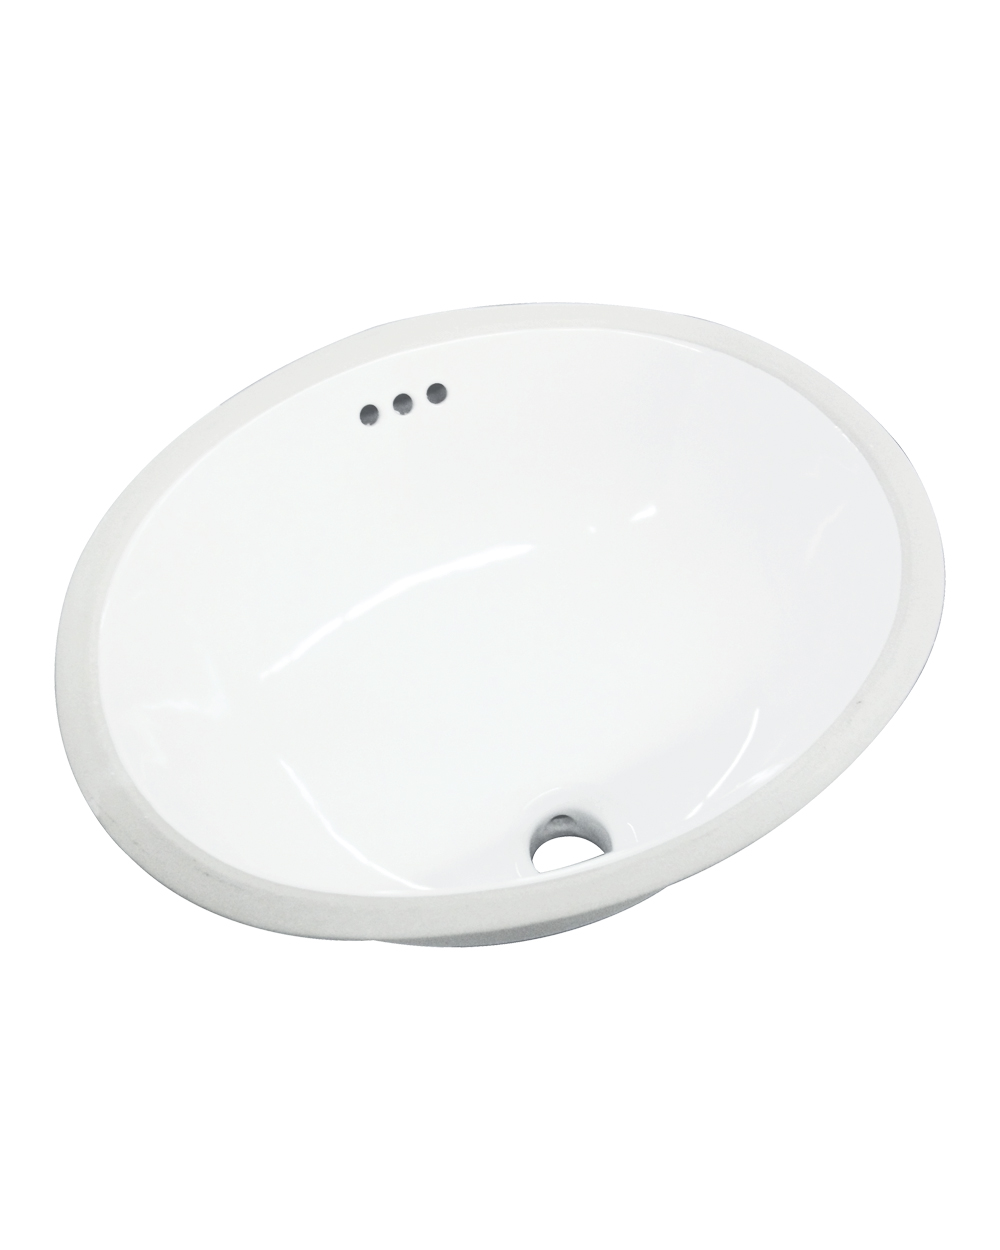 Madison Petite 17x14-1/4" Single Bowl Lav Sink in White